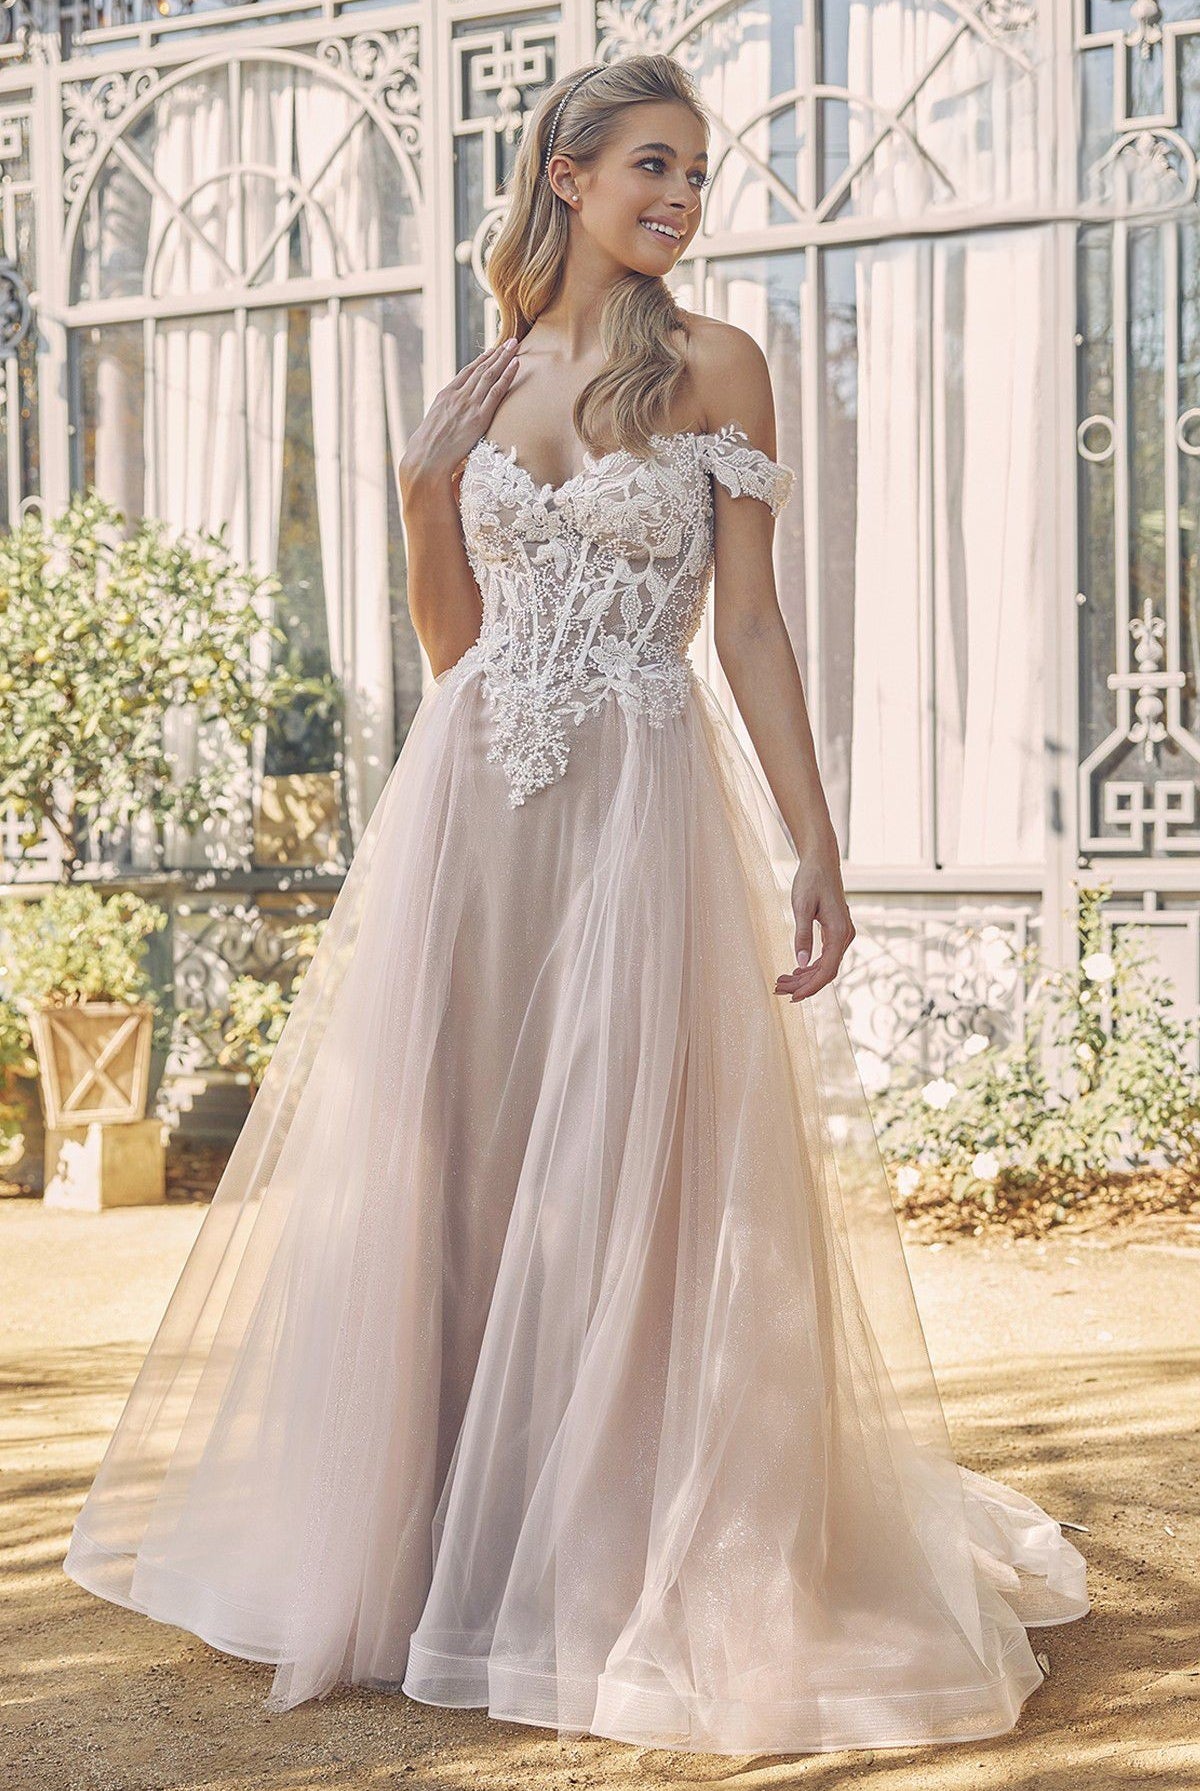 Glitter Tulle Off-Shoulder Floral Applique Long Wedding Dress NXC1107W-Wedding Dress-smcfashion.com